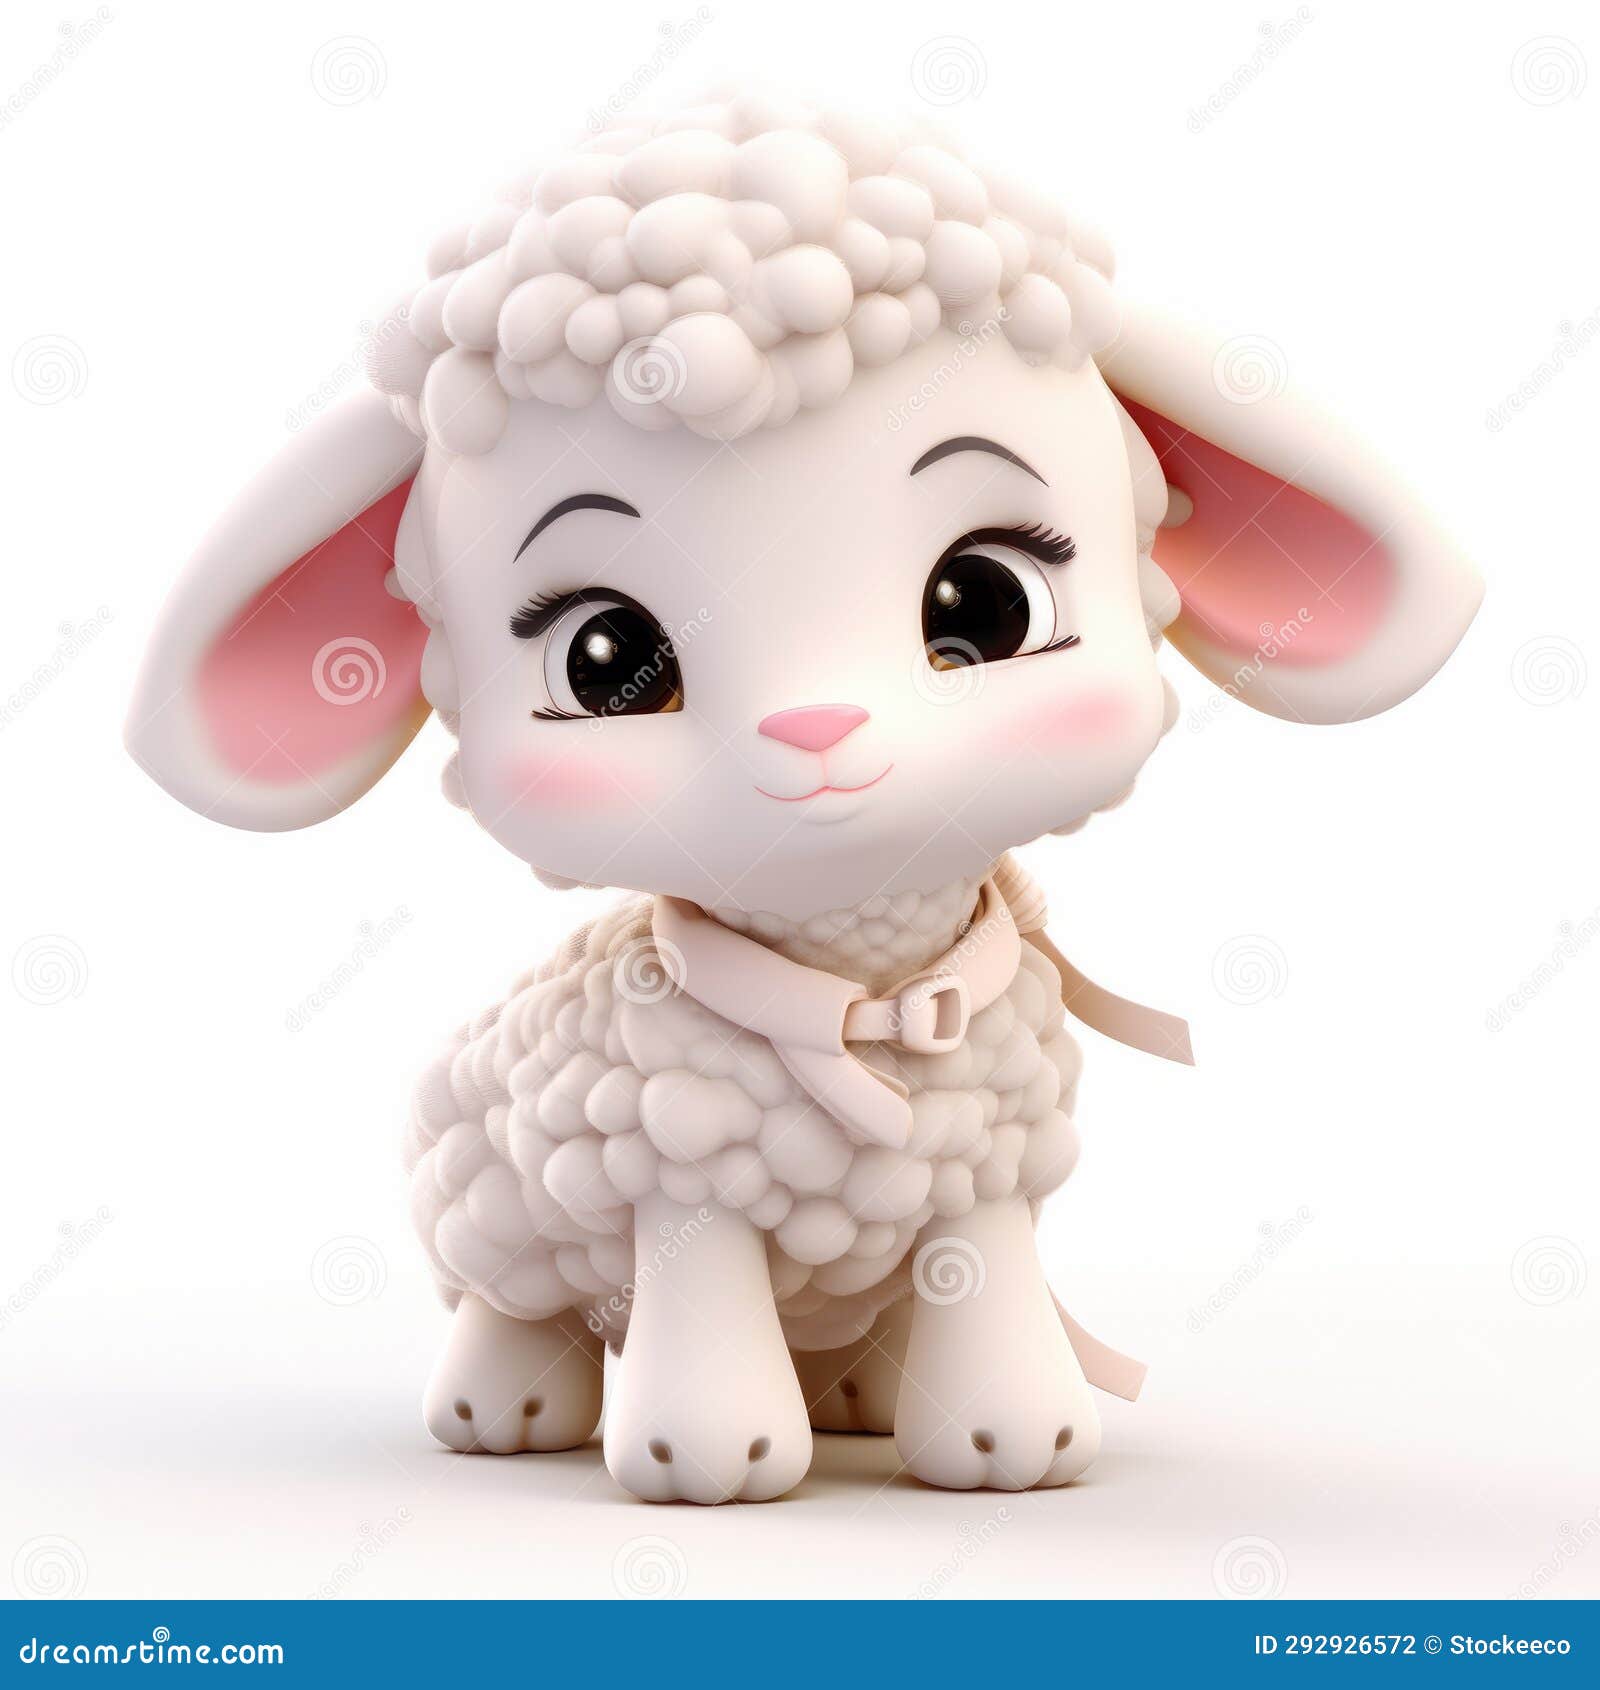 ArtStation - Cute Sheep